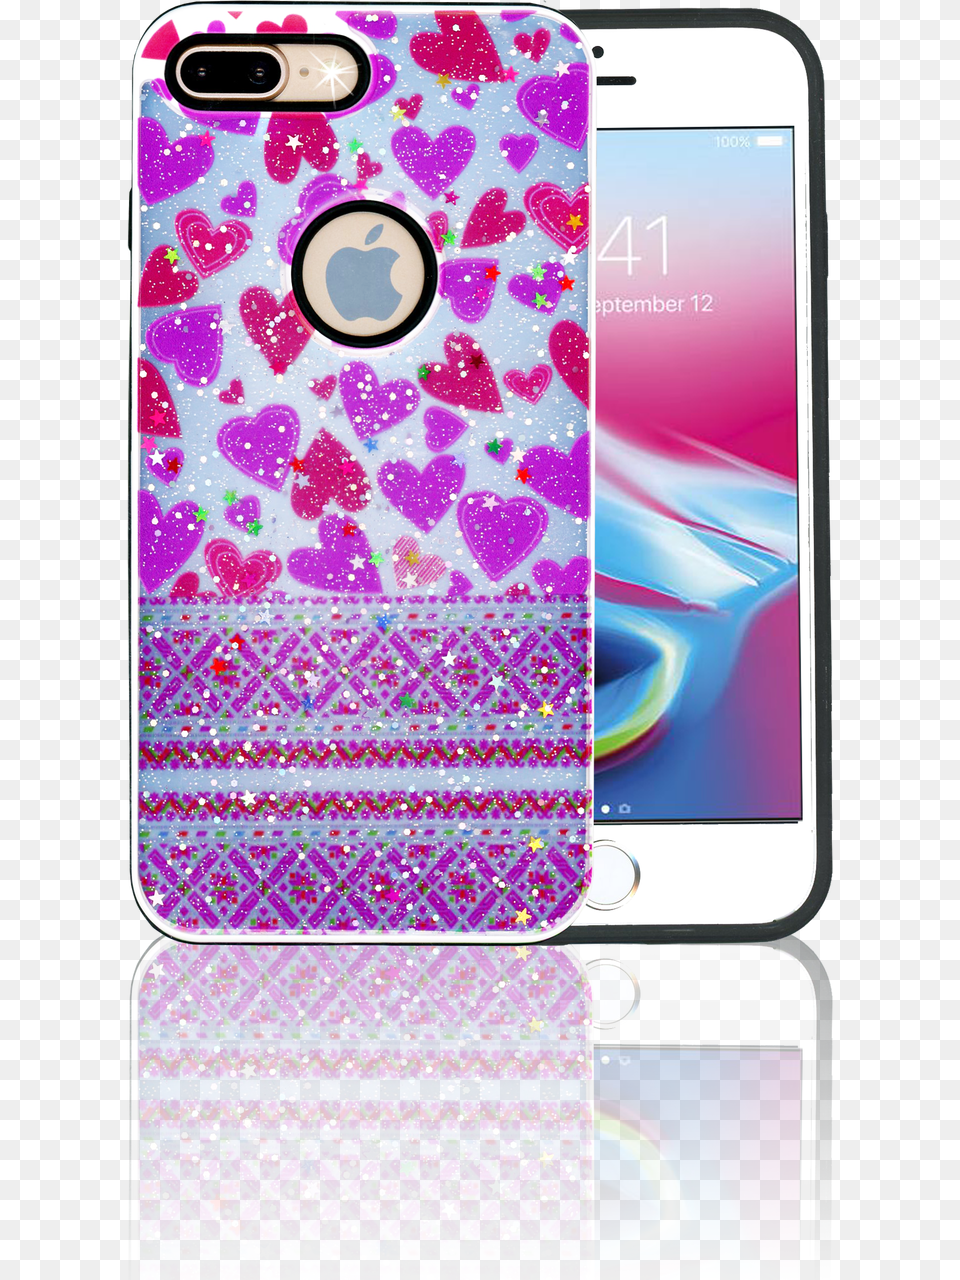 Iphone 7 Plus8 Plus Mm 3d Purple Hearts, Electronics, Mobile Phone, Phone Free Transparent Png